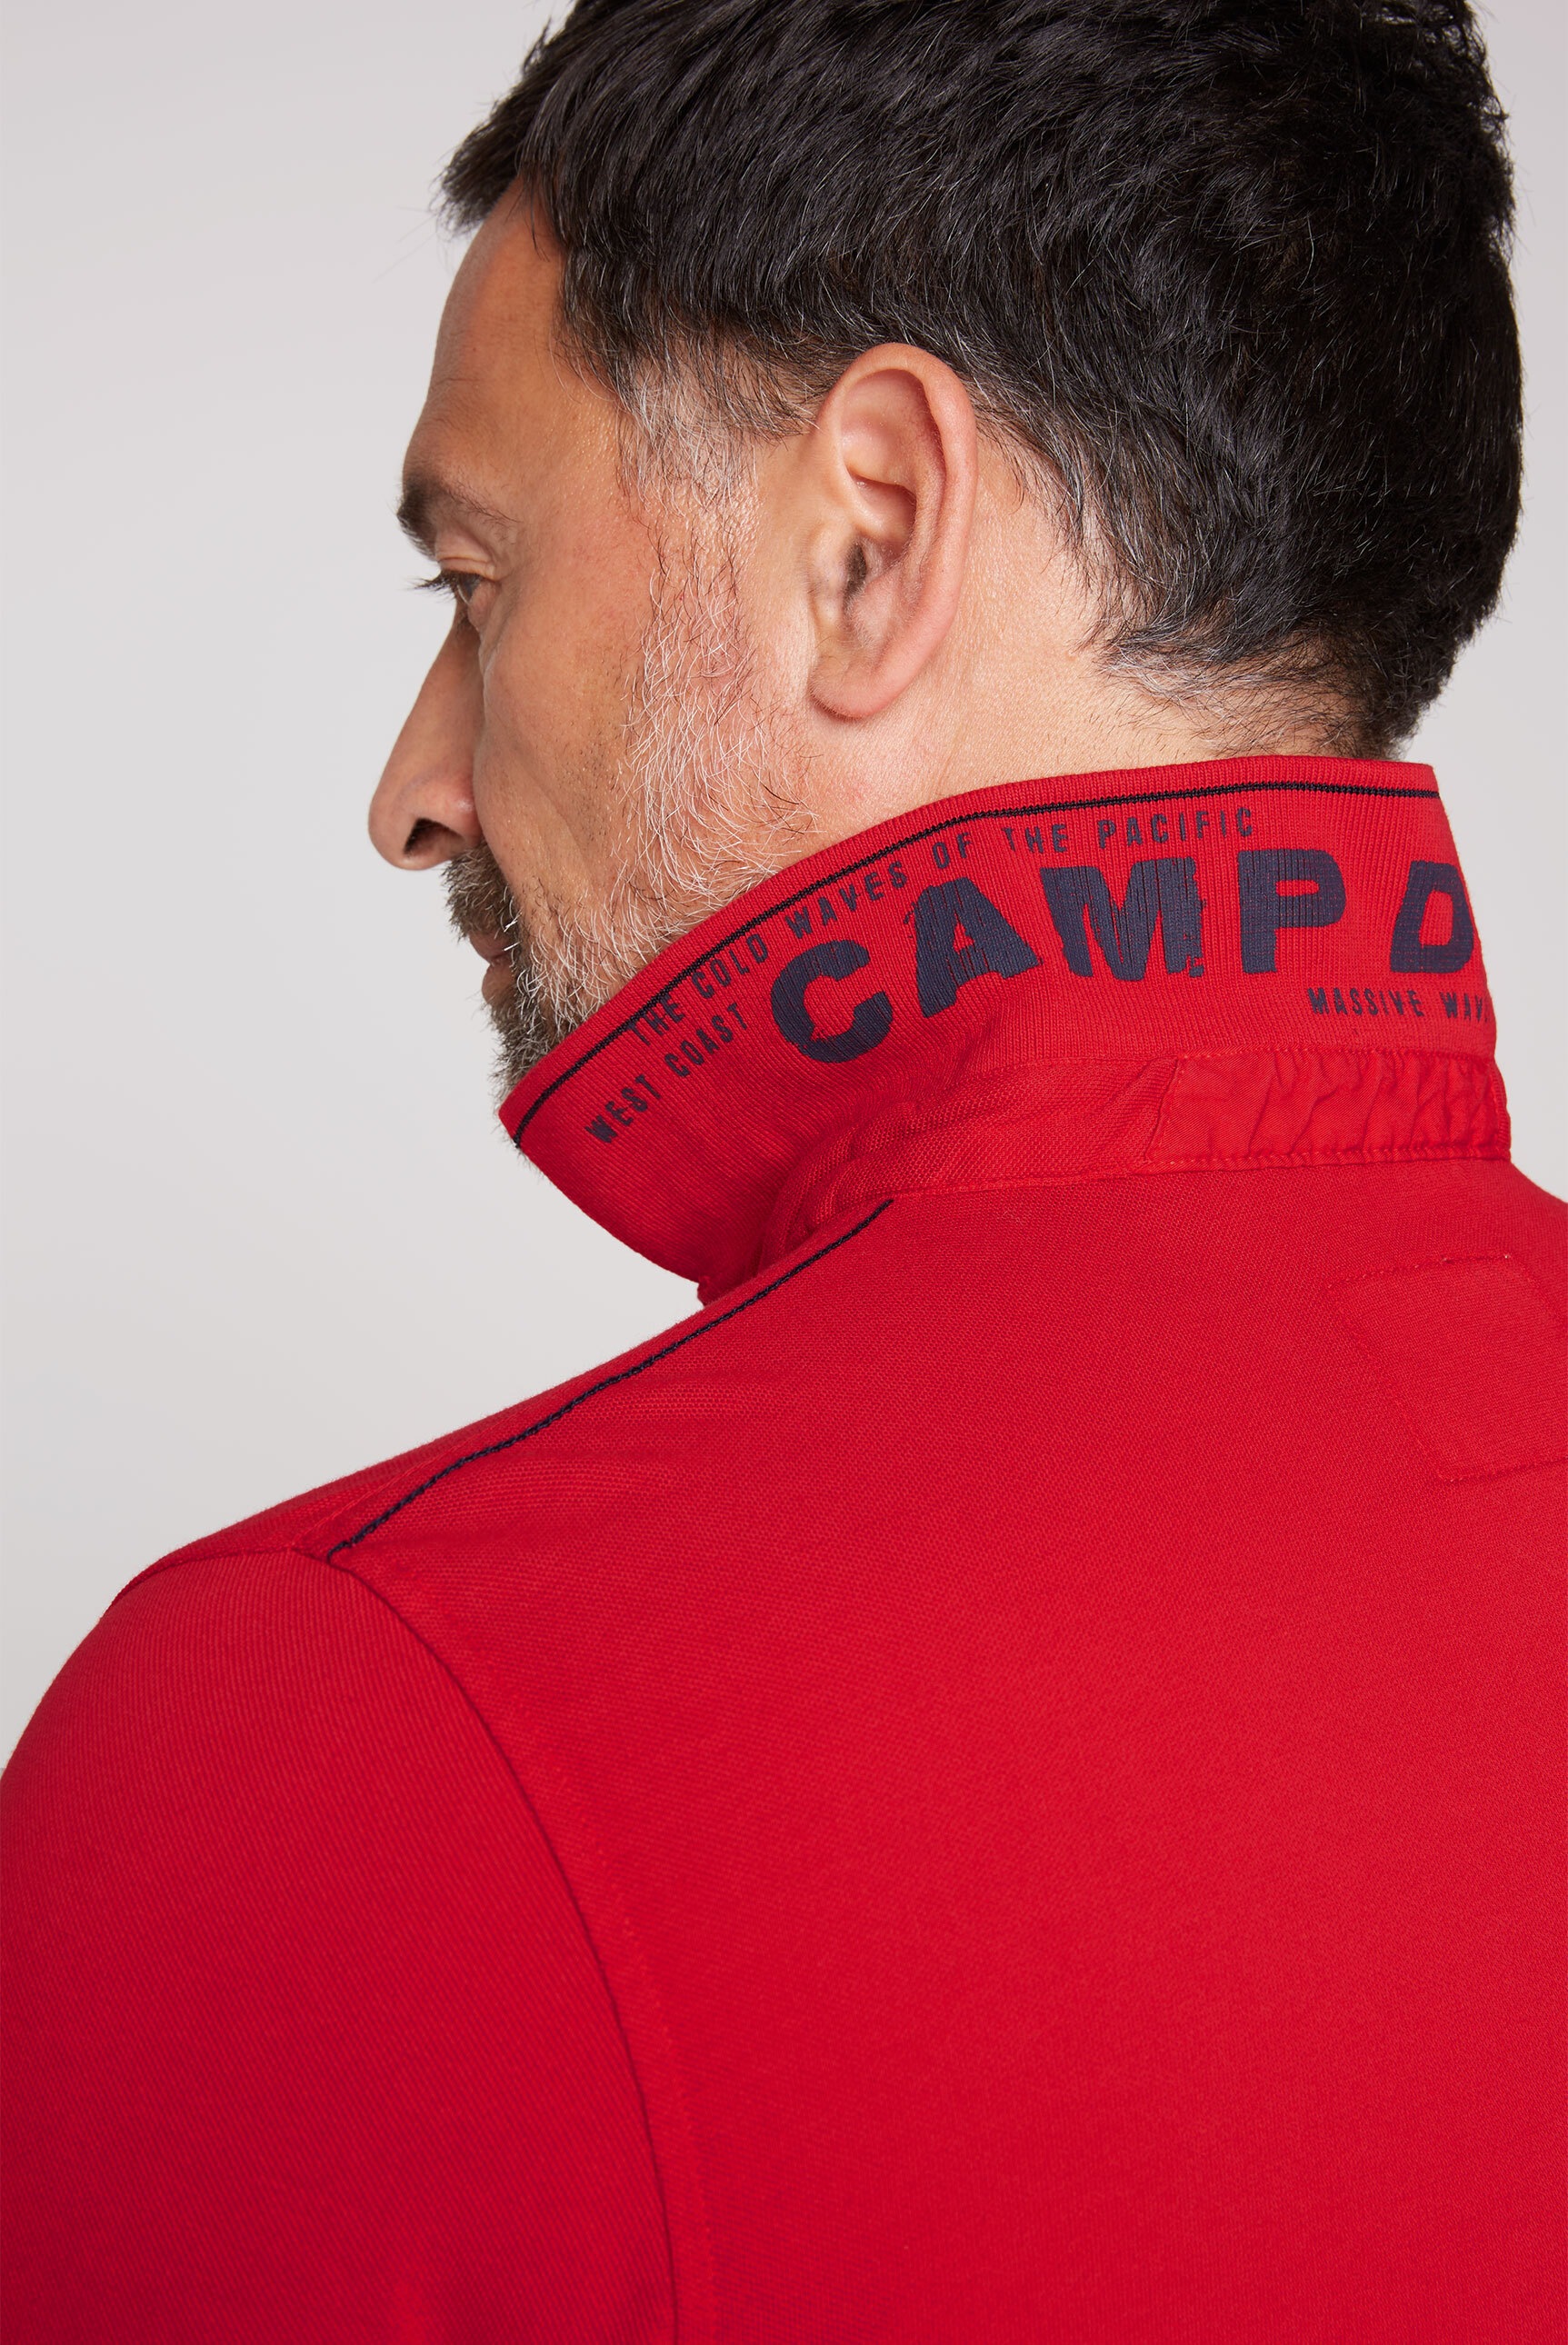 CAMP DAVID Poloshirt, aus Baumwolle